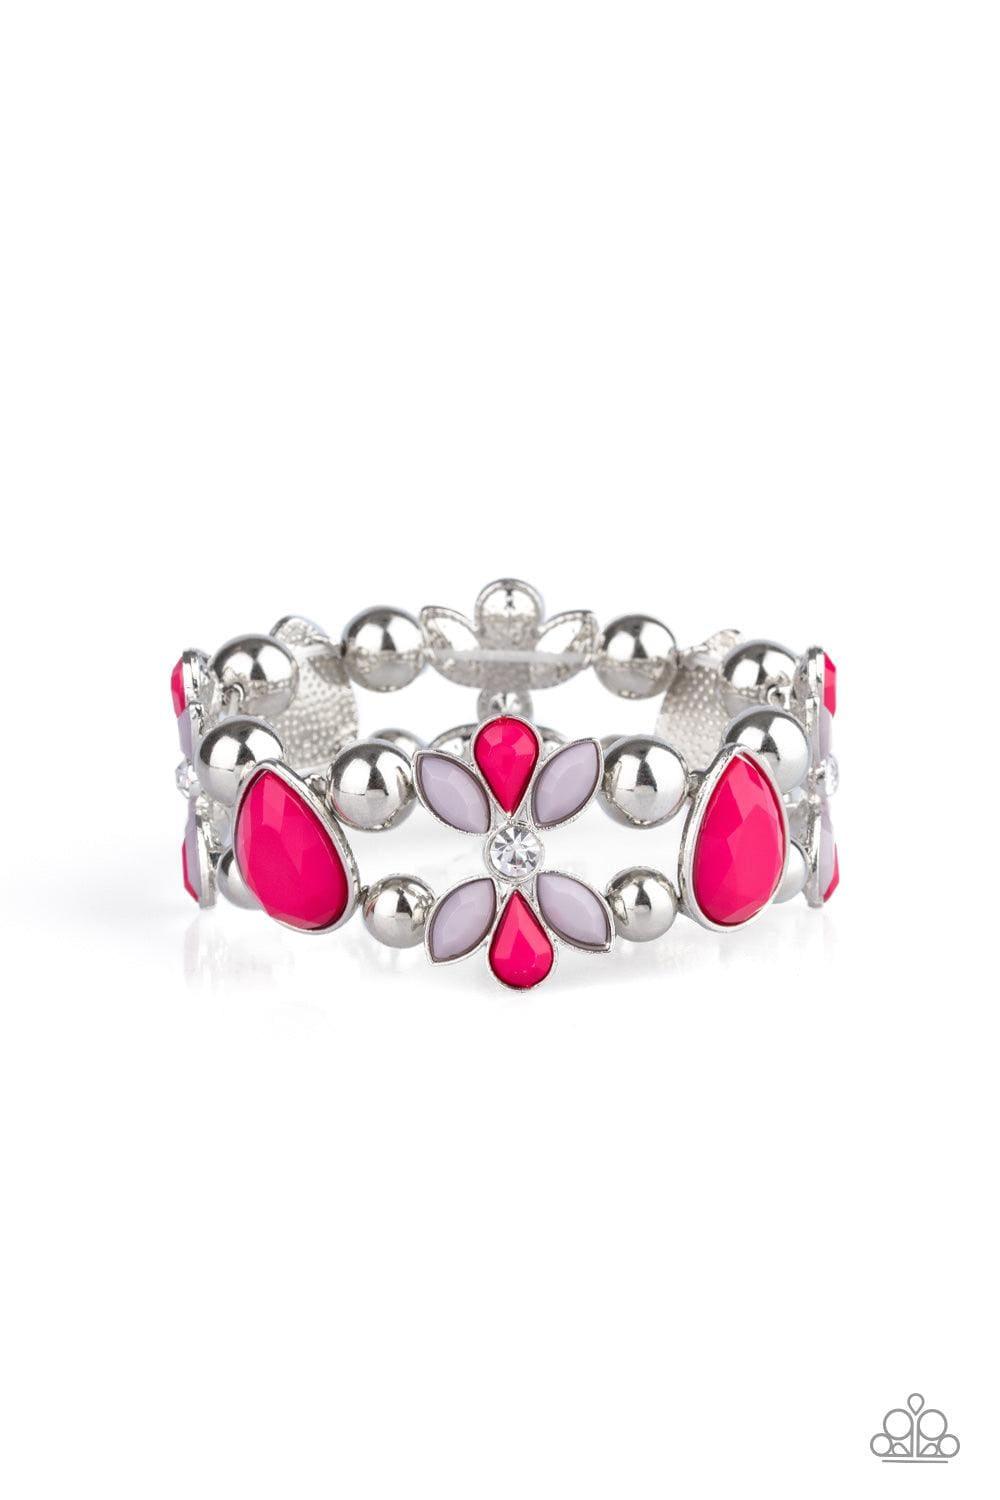 Paparazzi Accessories - Fabulously Flourishing - Pink Bracelet - Bling by JessieK